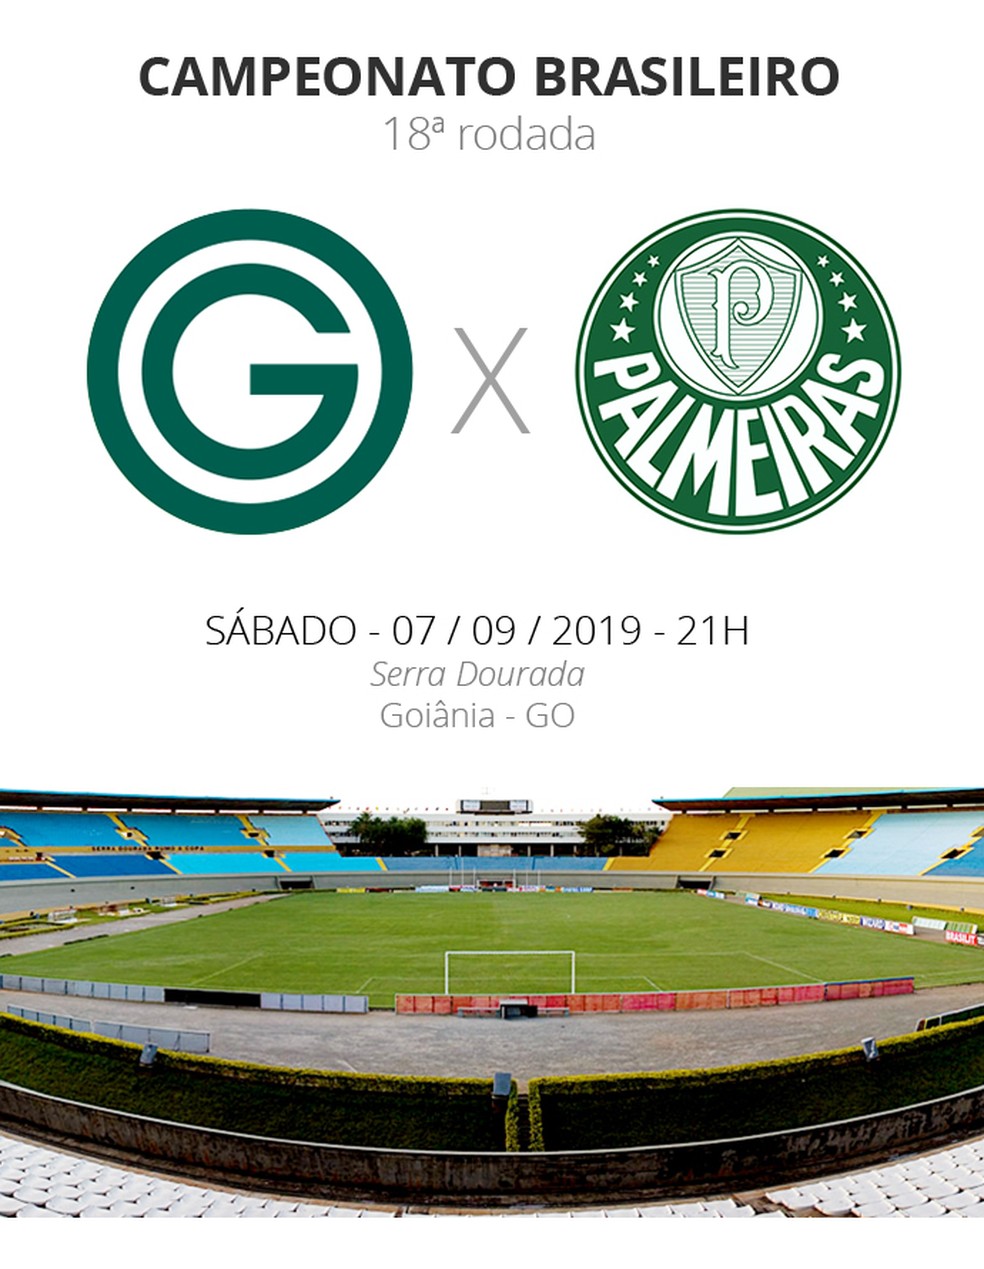 Vai passar o jogo do Palmeiras e Goiás?